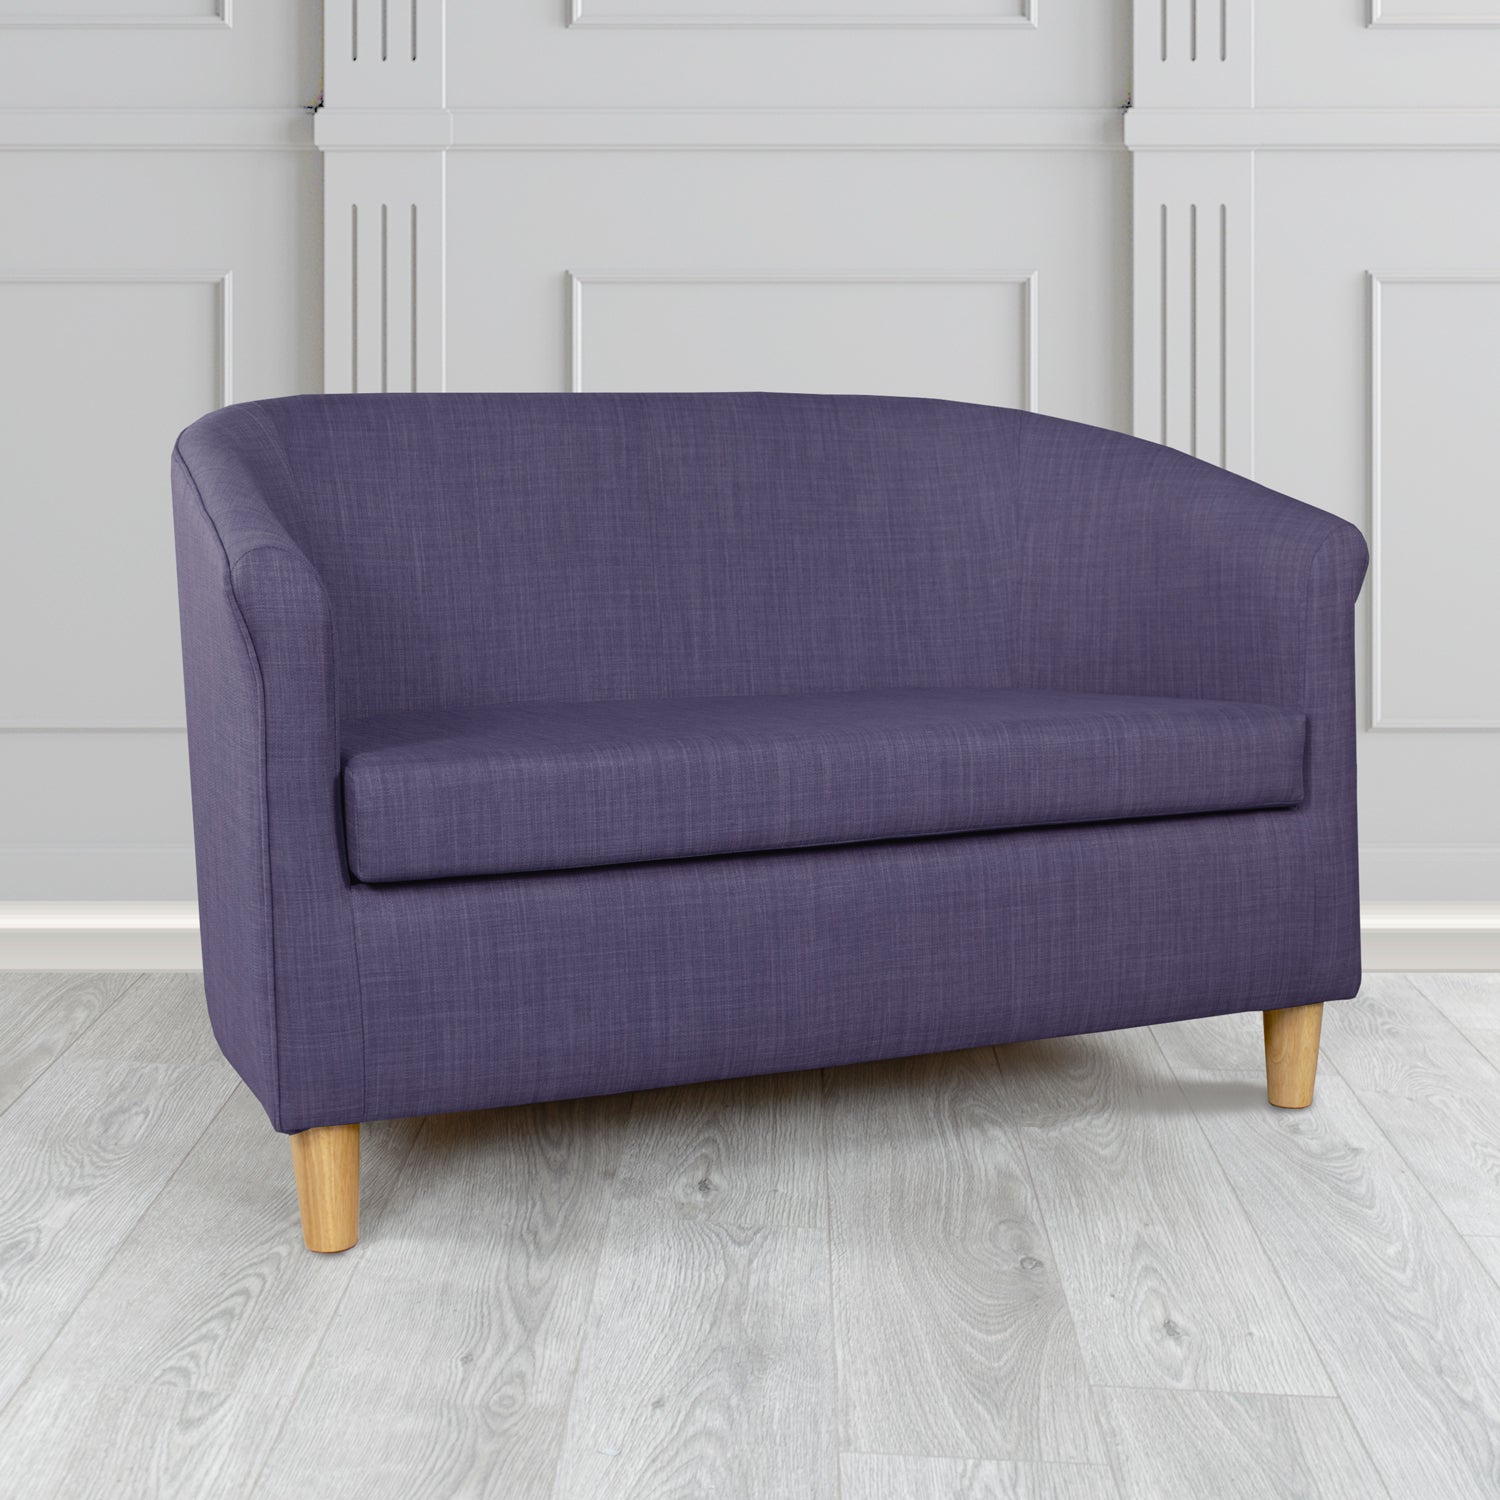 Tuscany Charles Purple Plain Linen Fabric 2 Seater Tub Sofa - The Tub Chair Shop